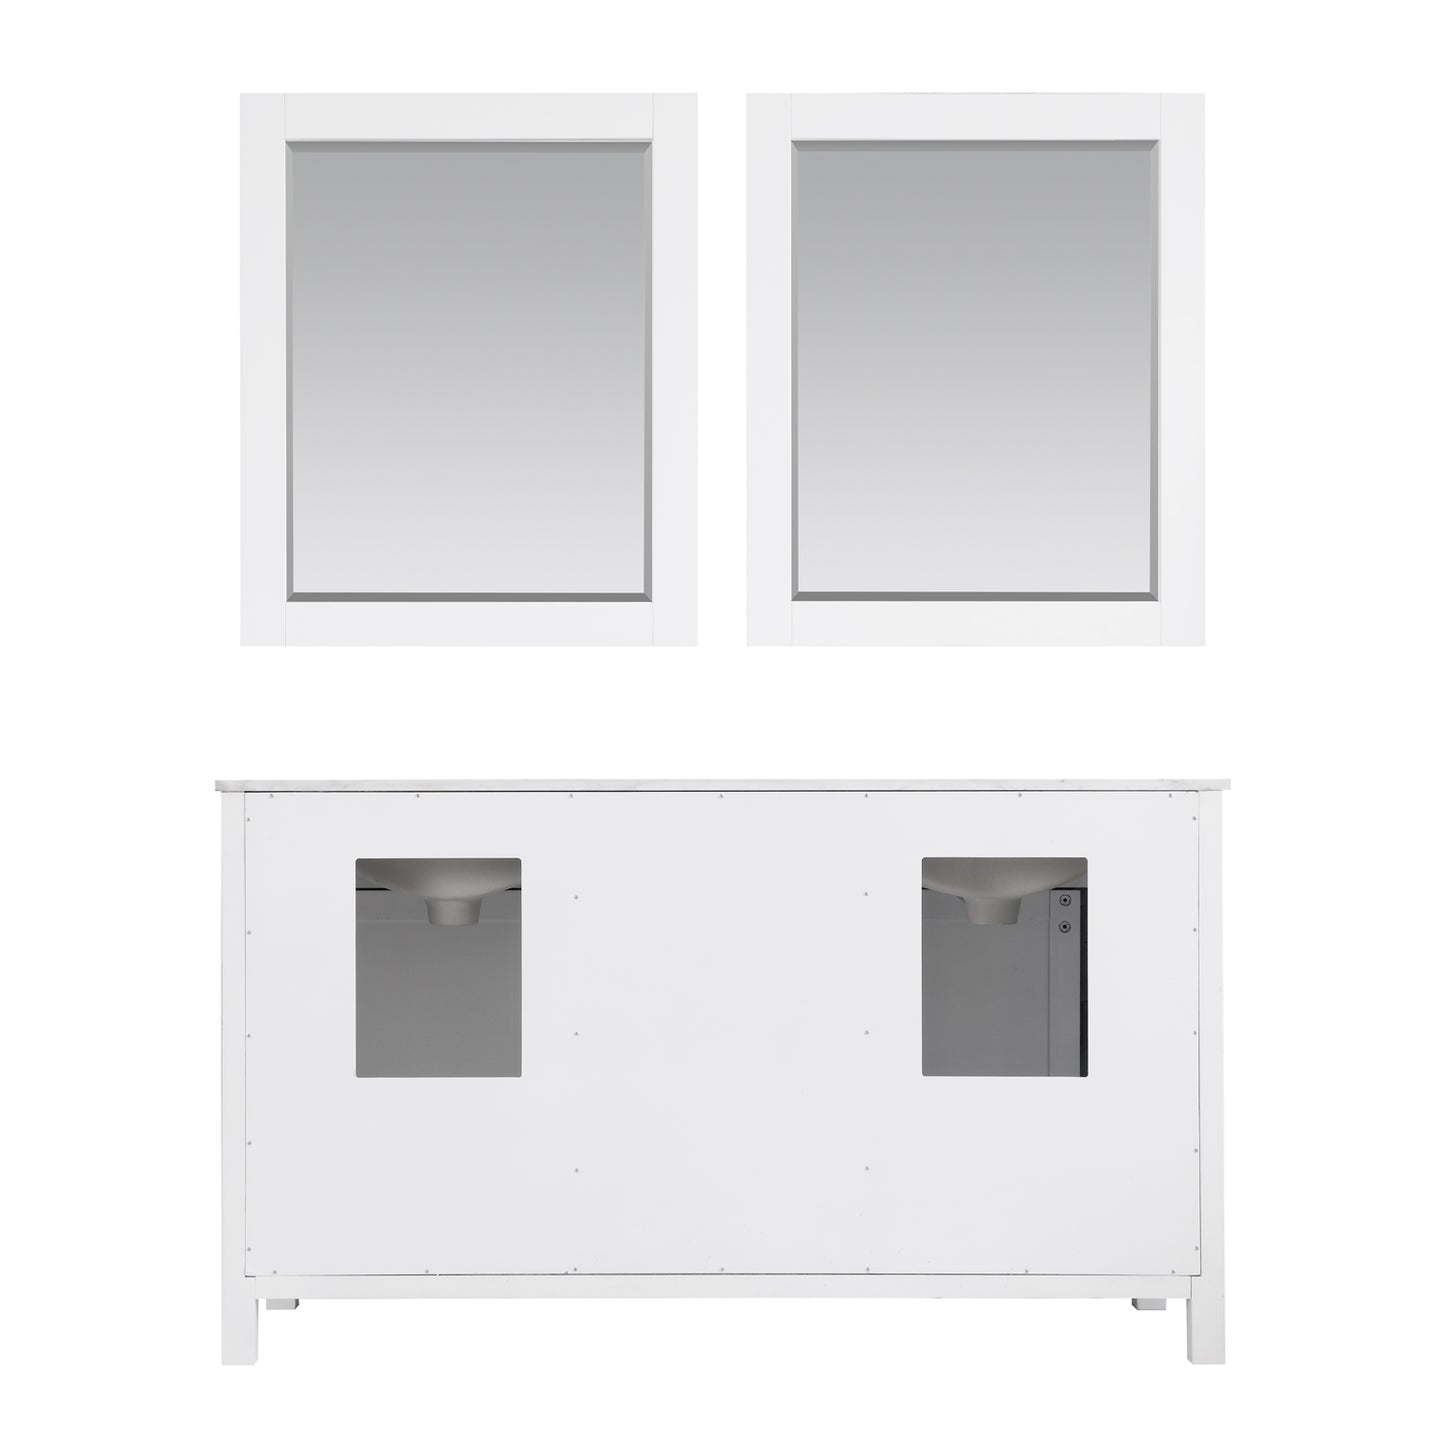 Kinsley Double Bathroom Vanity Set in Gray and Carrara White Marble Countertop